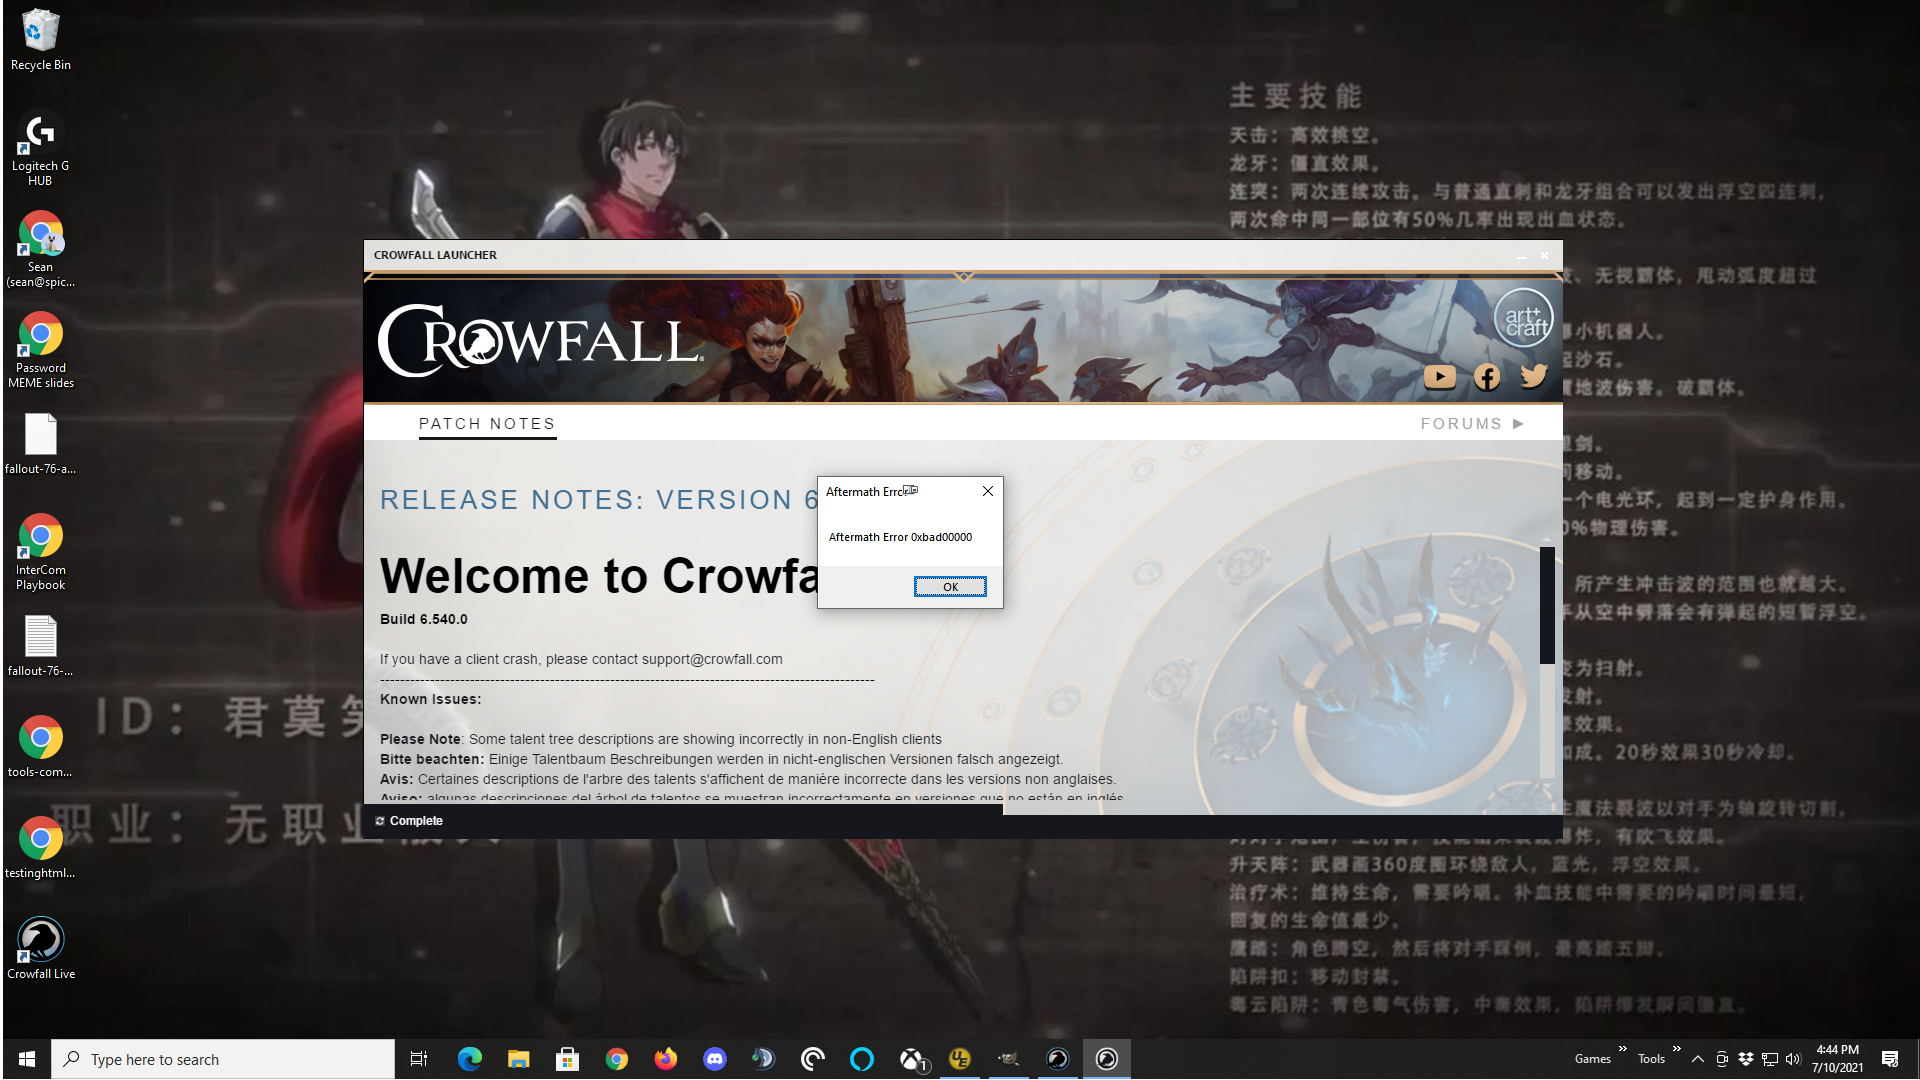 crowfall-aftermath-error-0xbad00000.png